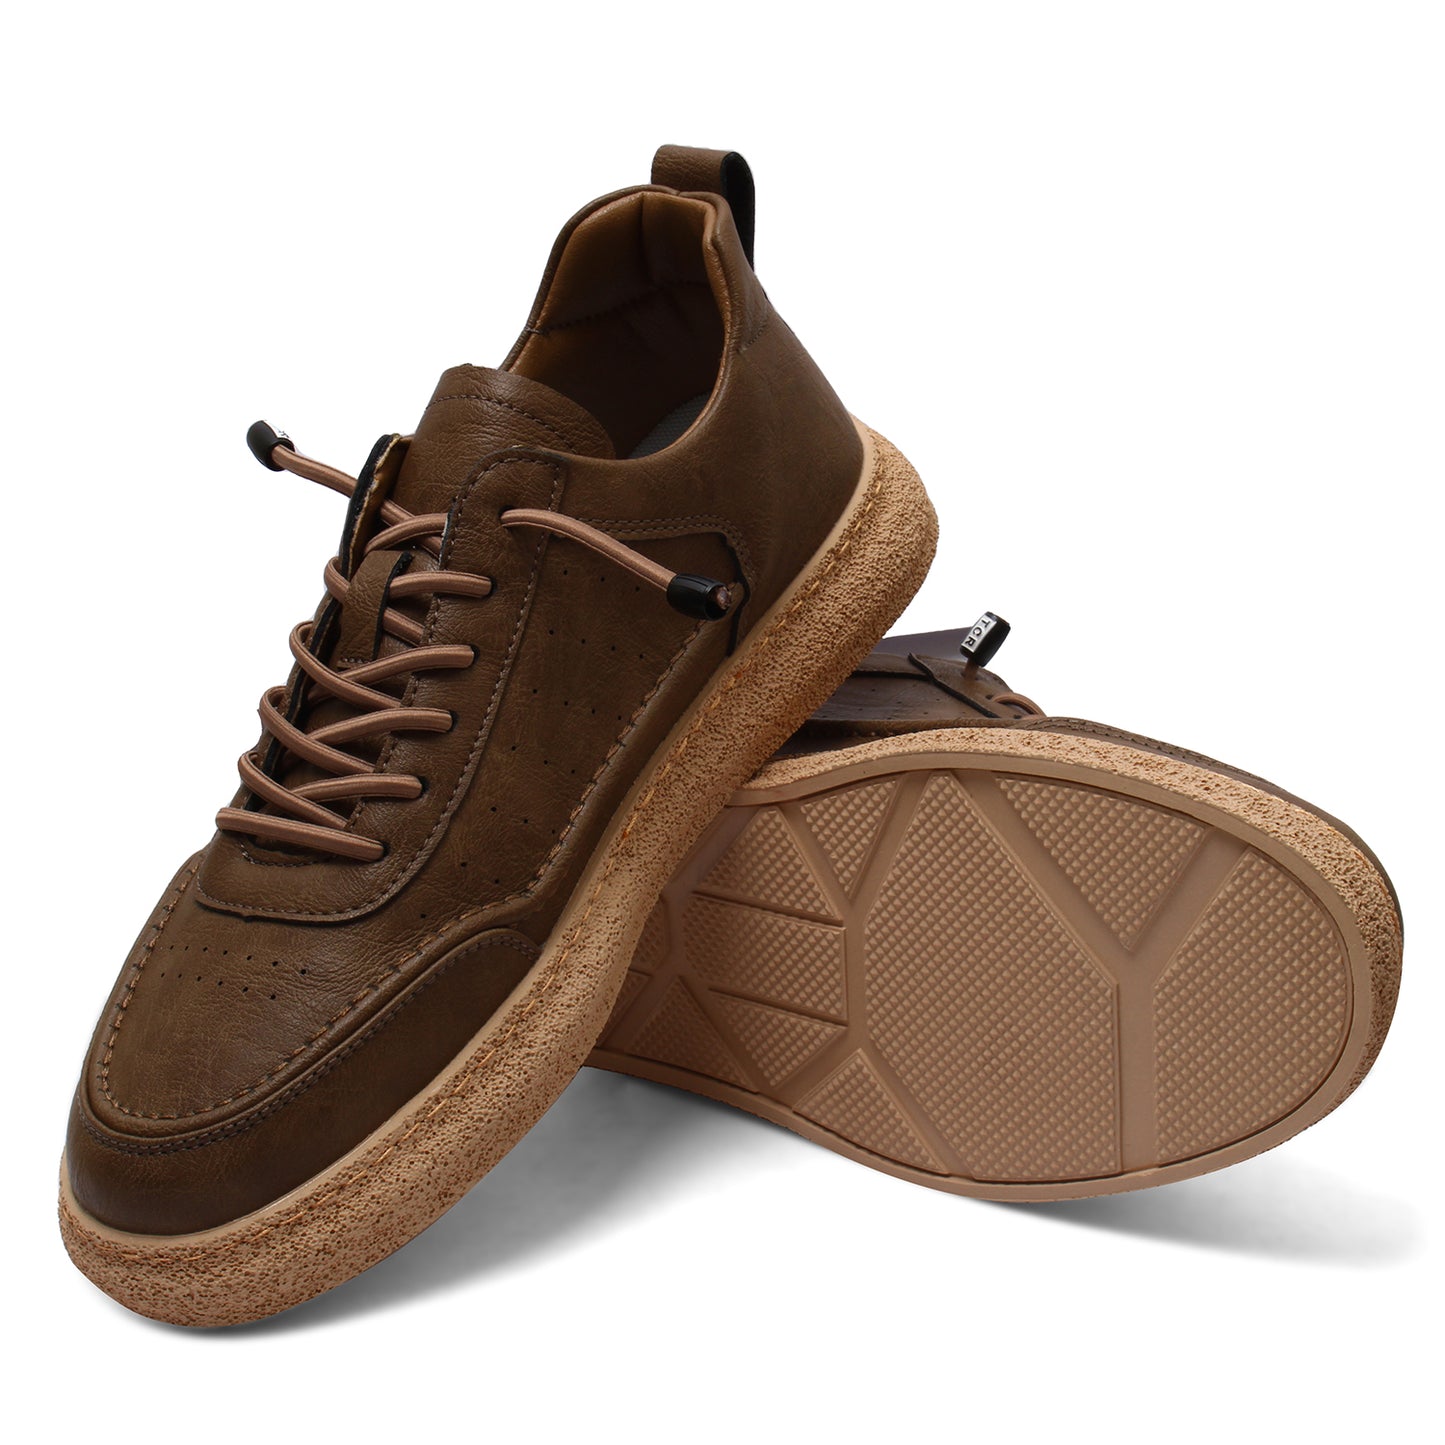 Tracer Scoosh 2715 Sneaker's for Men Brown